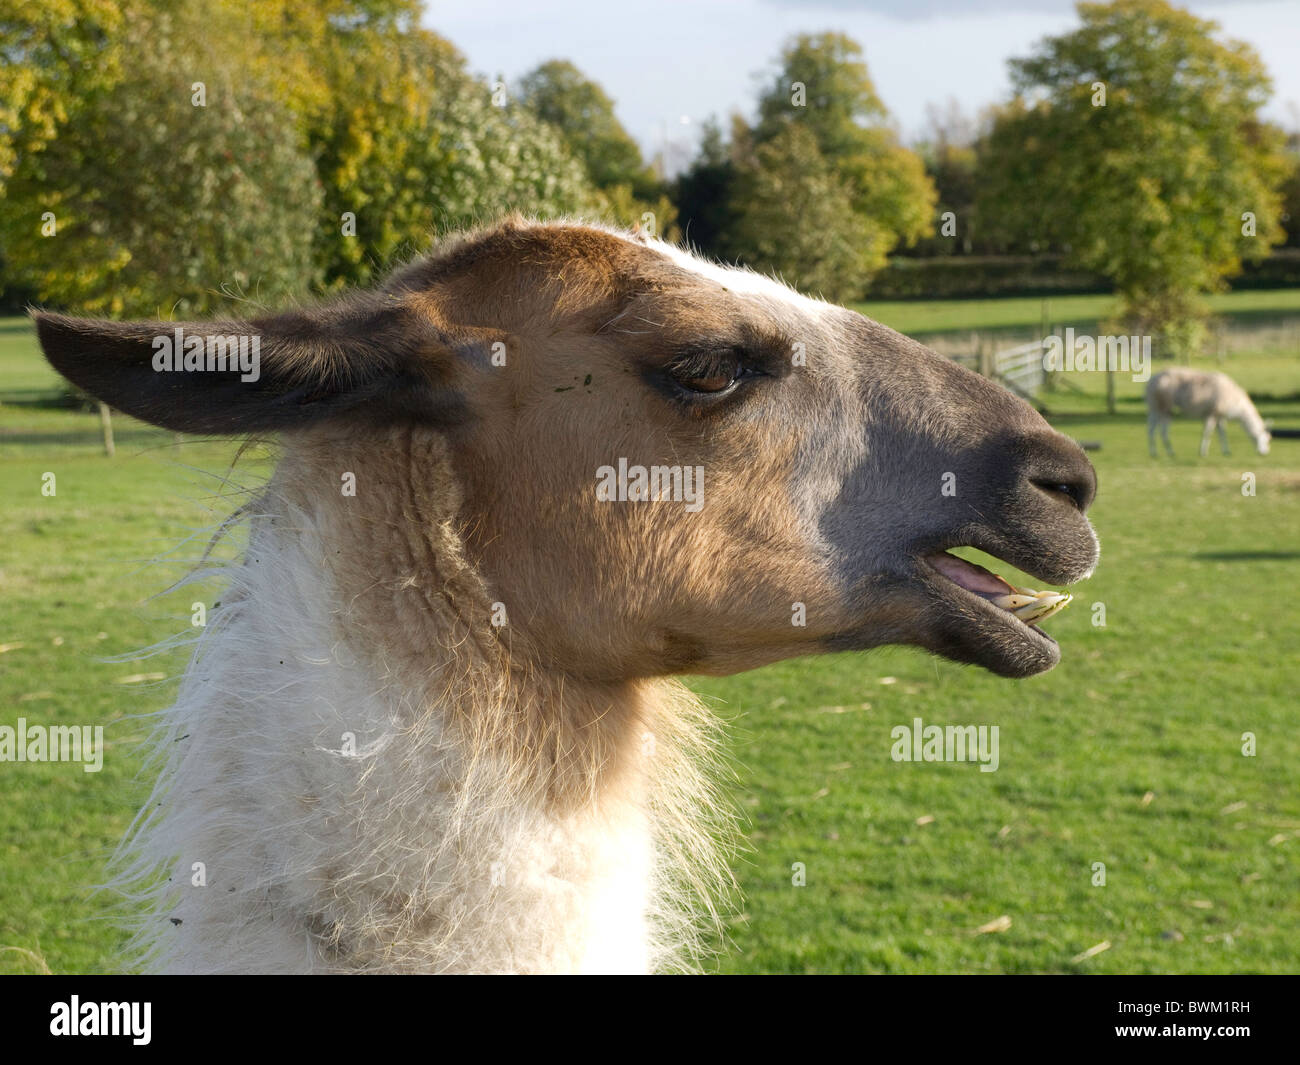 Llama at Whitepost farm, Farnsfield, Notts Stock Photo